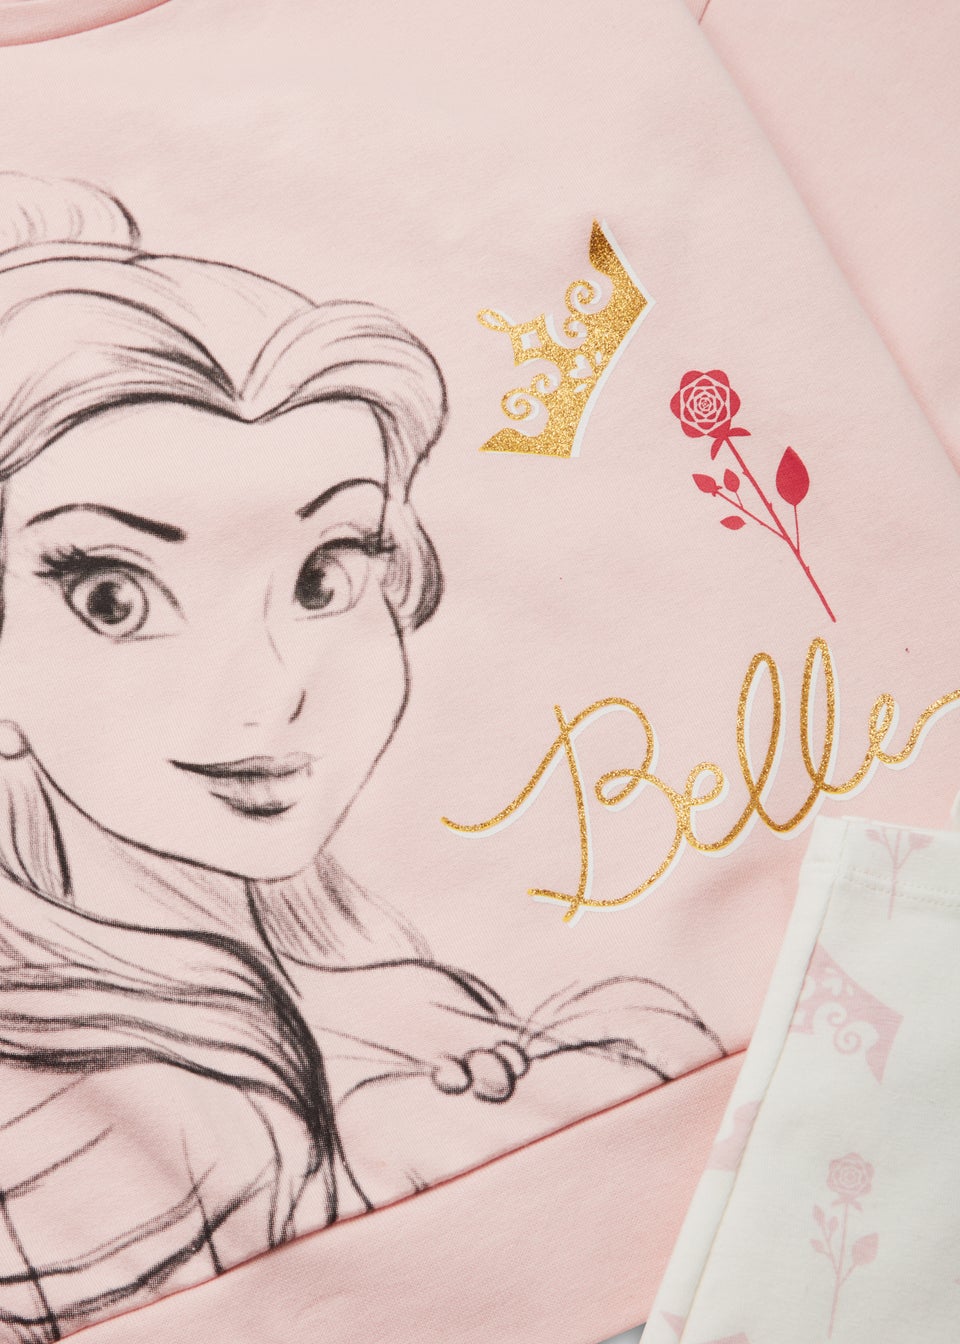 Kids Pink & Cream Disney Belle Pyjama Set (3-9yrs)